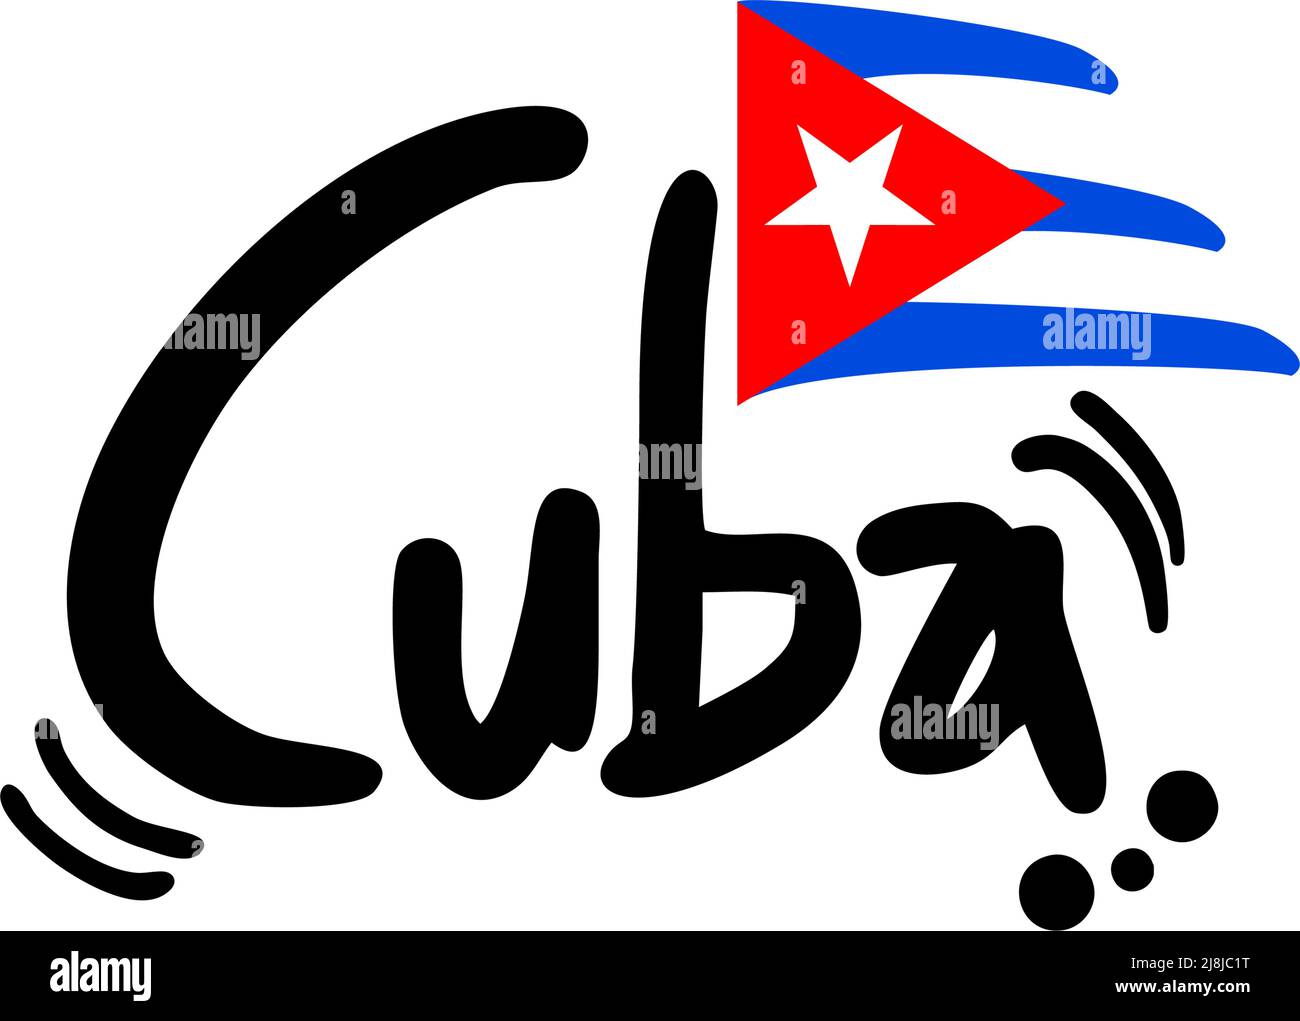 Cuba flag Stock Vector